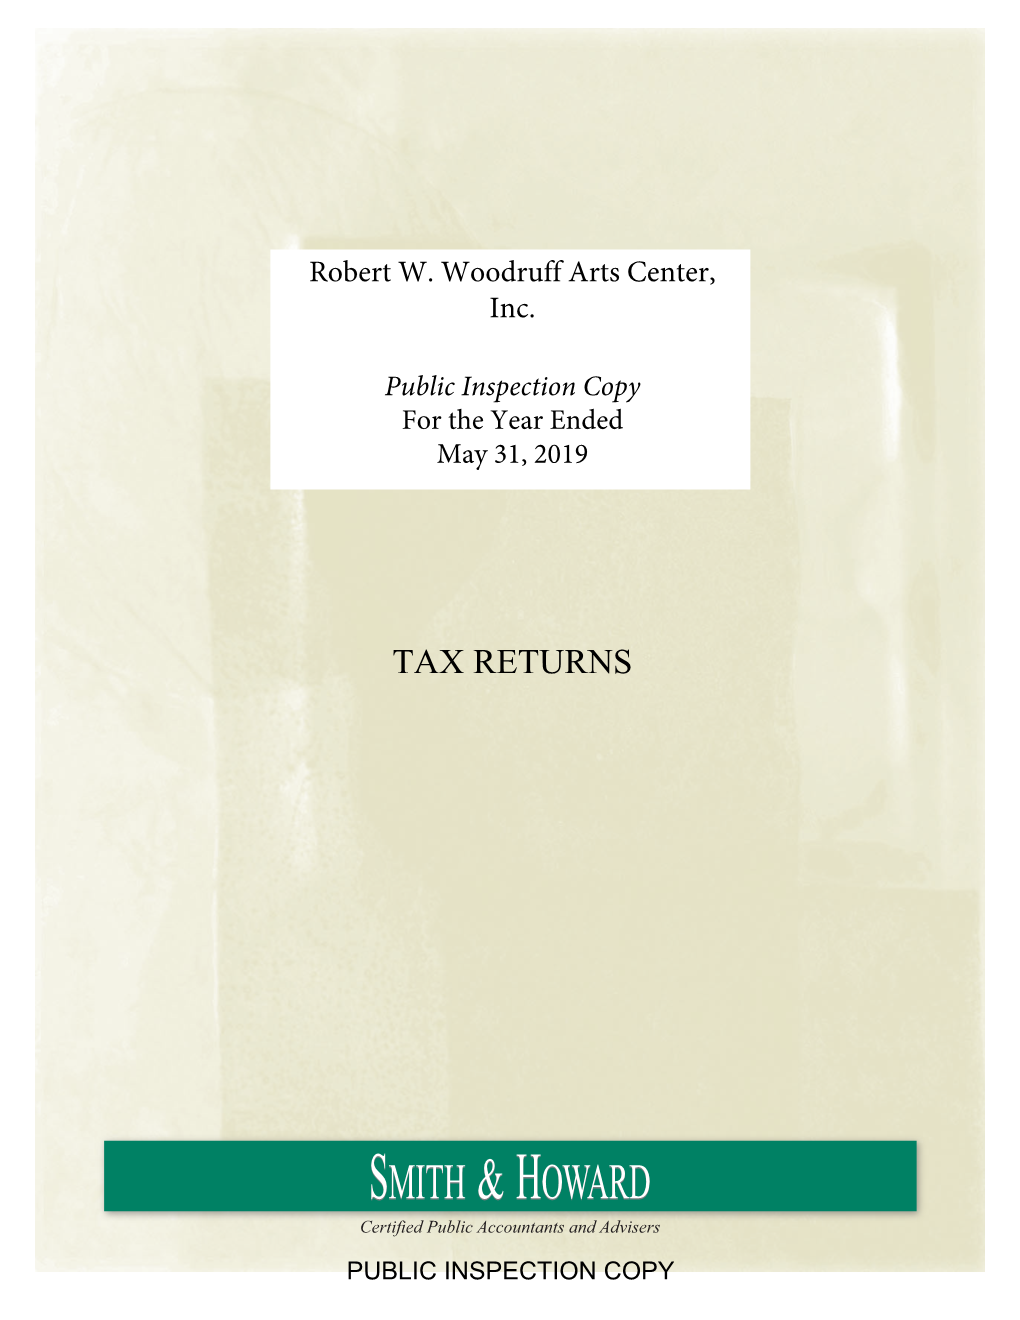 V1|ROBERT W. WOODRUFF ARTS CENTER|81506|NOT-FOR-PROFIT|TAX RETURN|PUBLIC INSPECTION COPY|2019|5/31|202